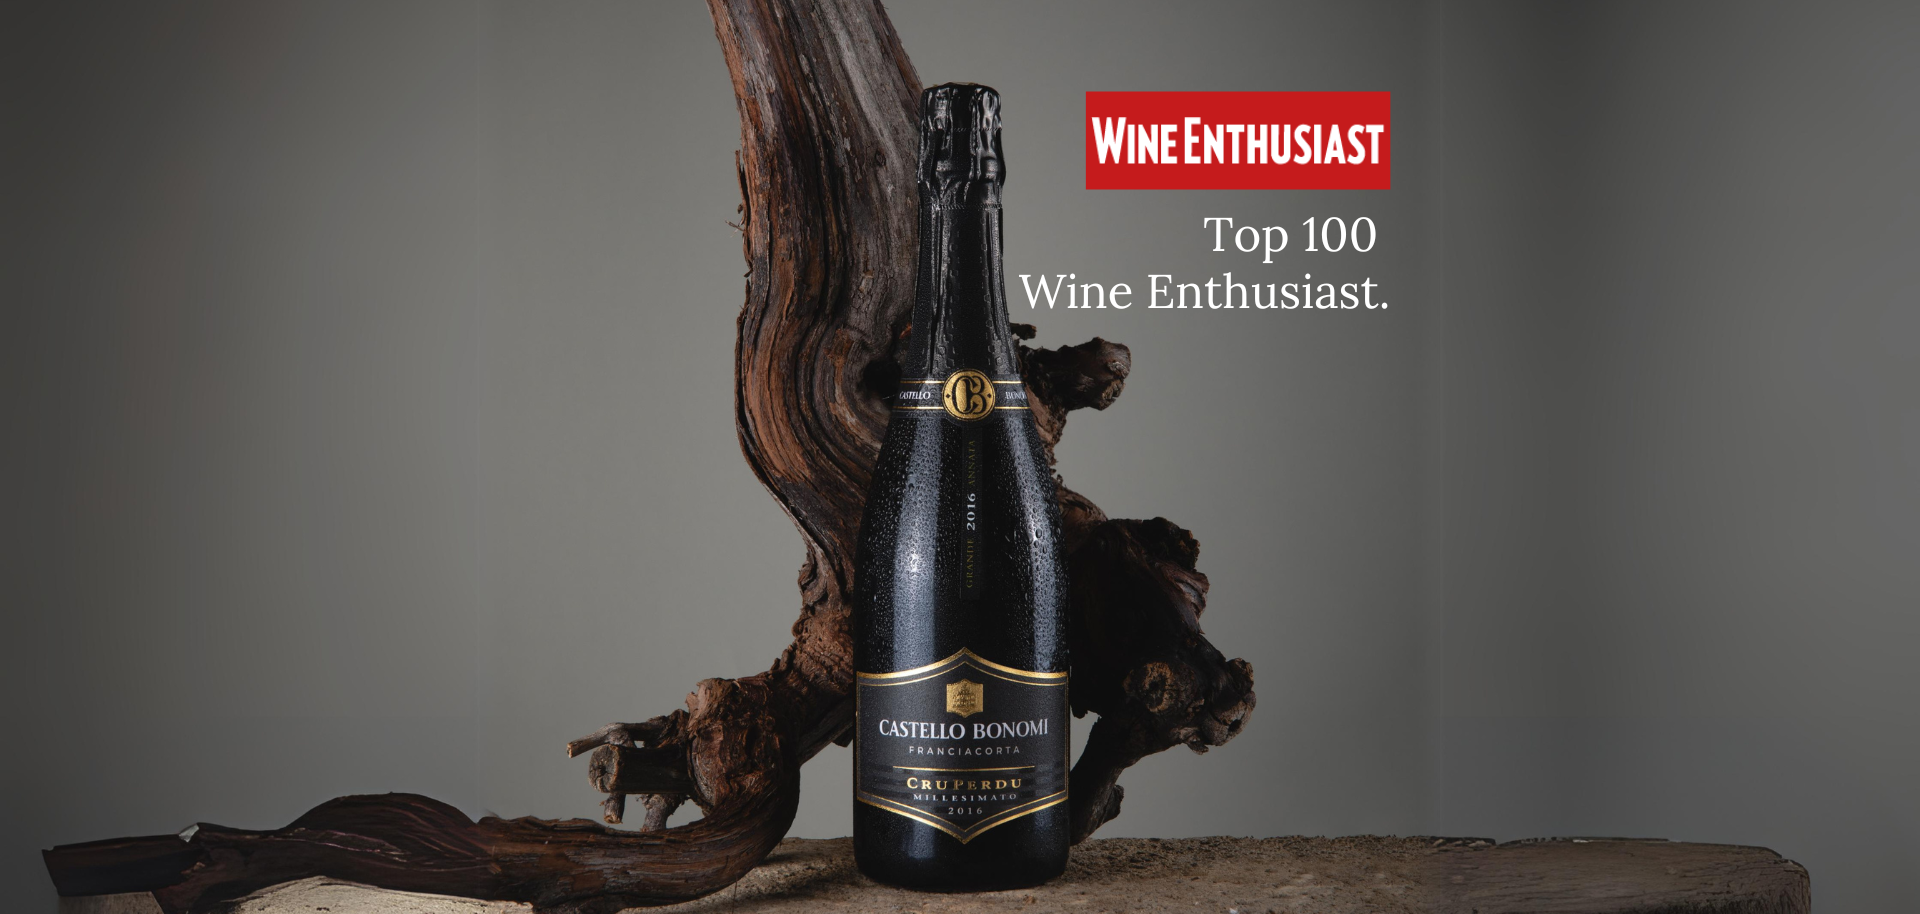 CurPerdu Grande Annata 2016 nella Top 100 Wine Enthusiast